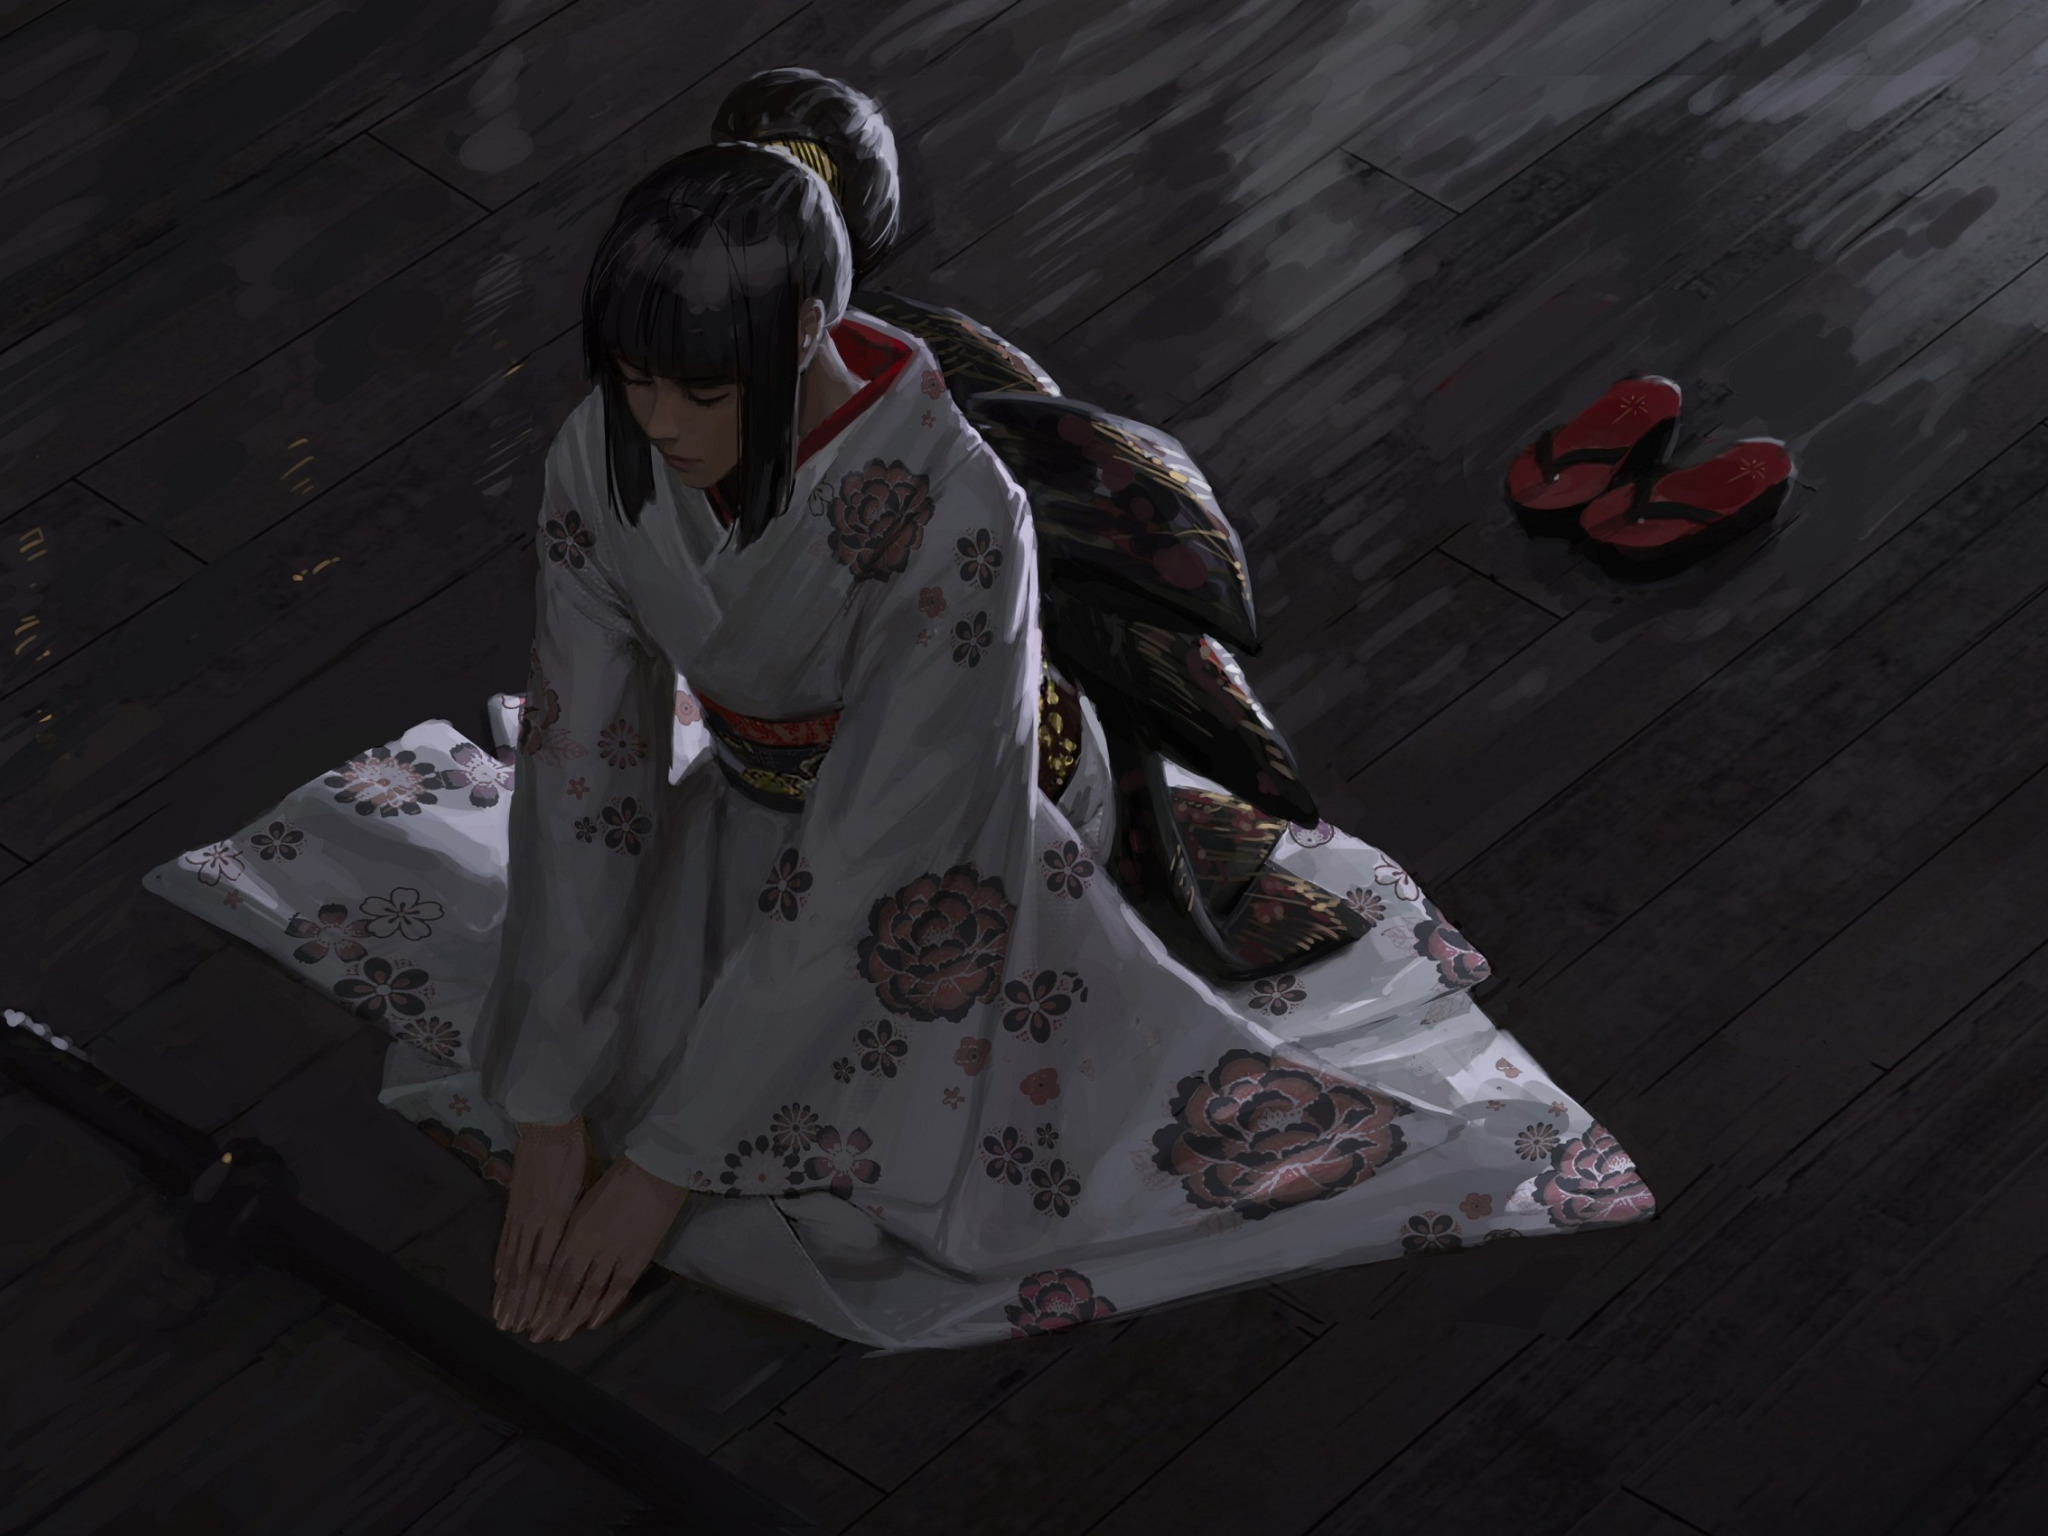 Guweiz Тихиро. Сидит в кимоно. Девушка в кимоно сидит. Девушка кимоно катана.